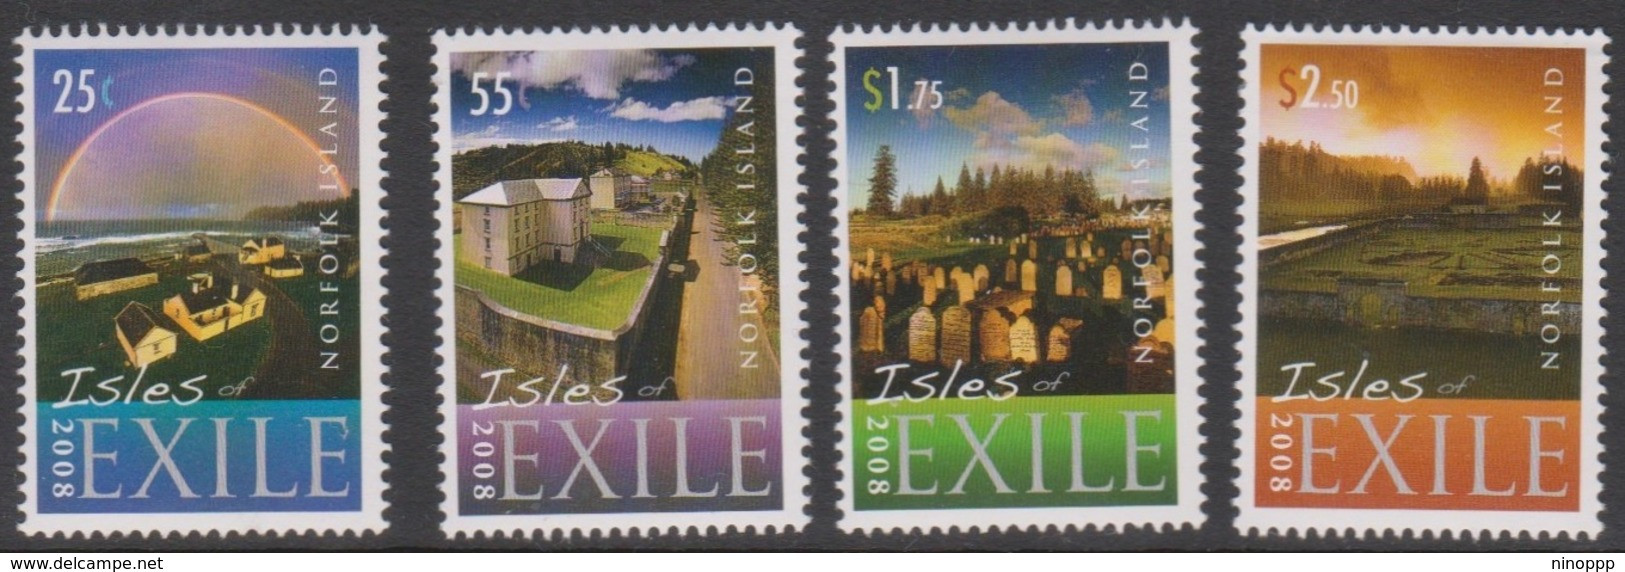 Norfolk Island ASC 1031-1034 2008 Isles Of Exile, Mint Never Hinged - Norfolk Island